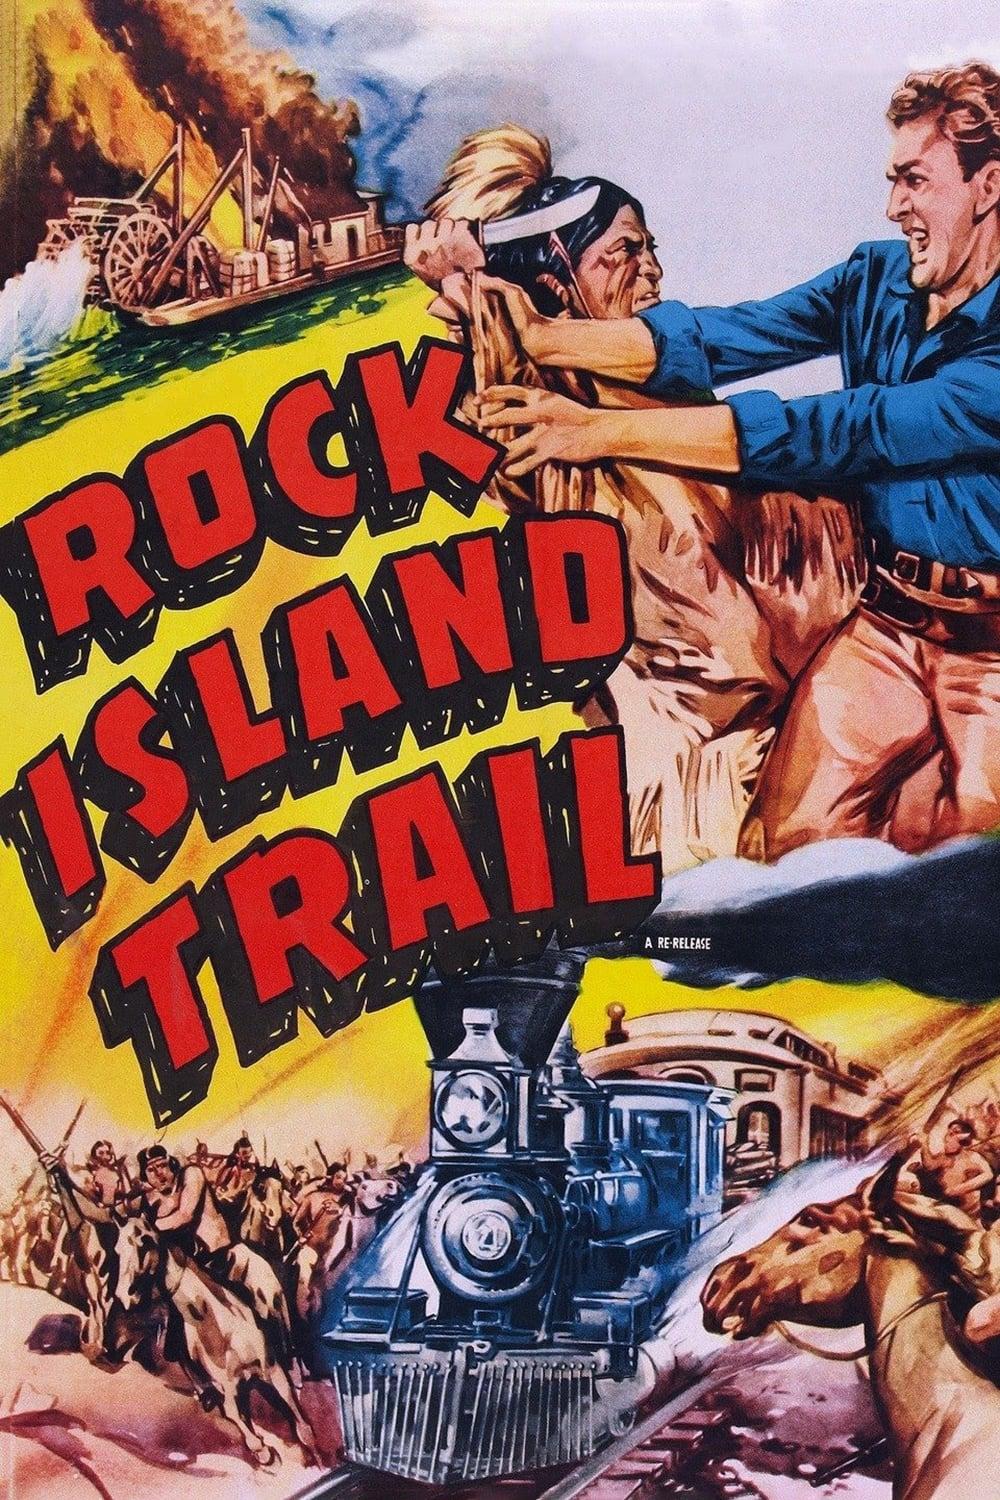 Rock Island Trail poster